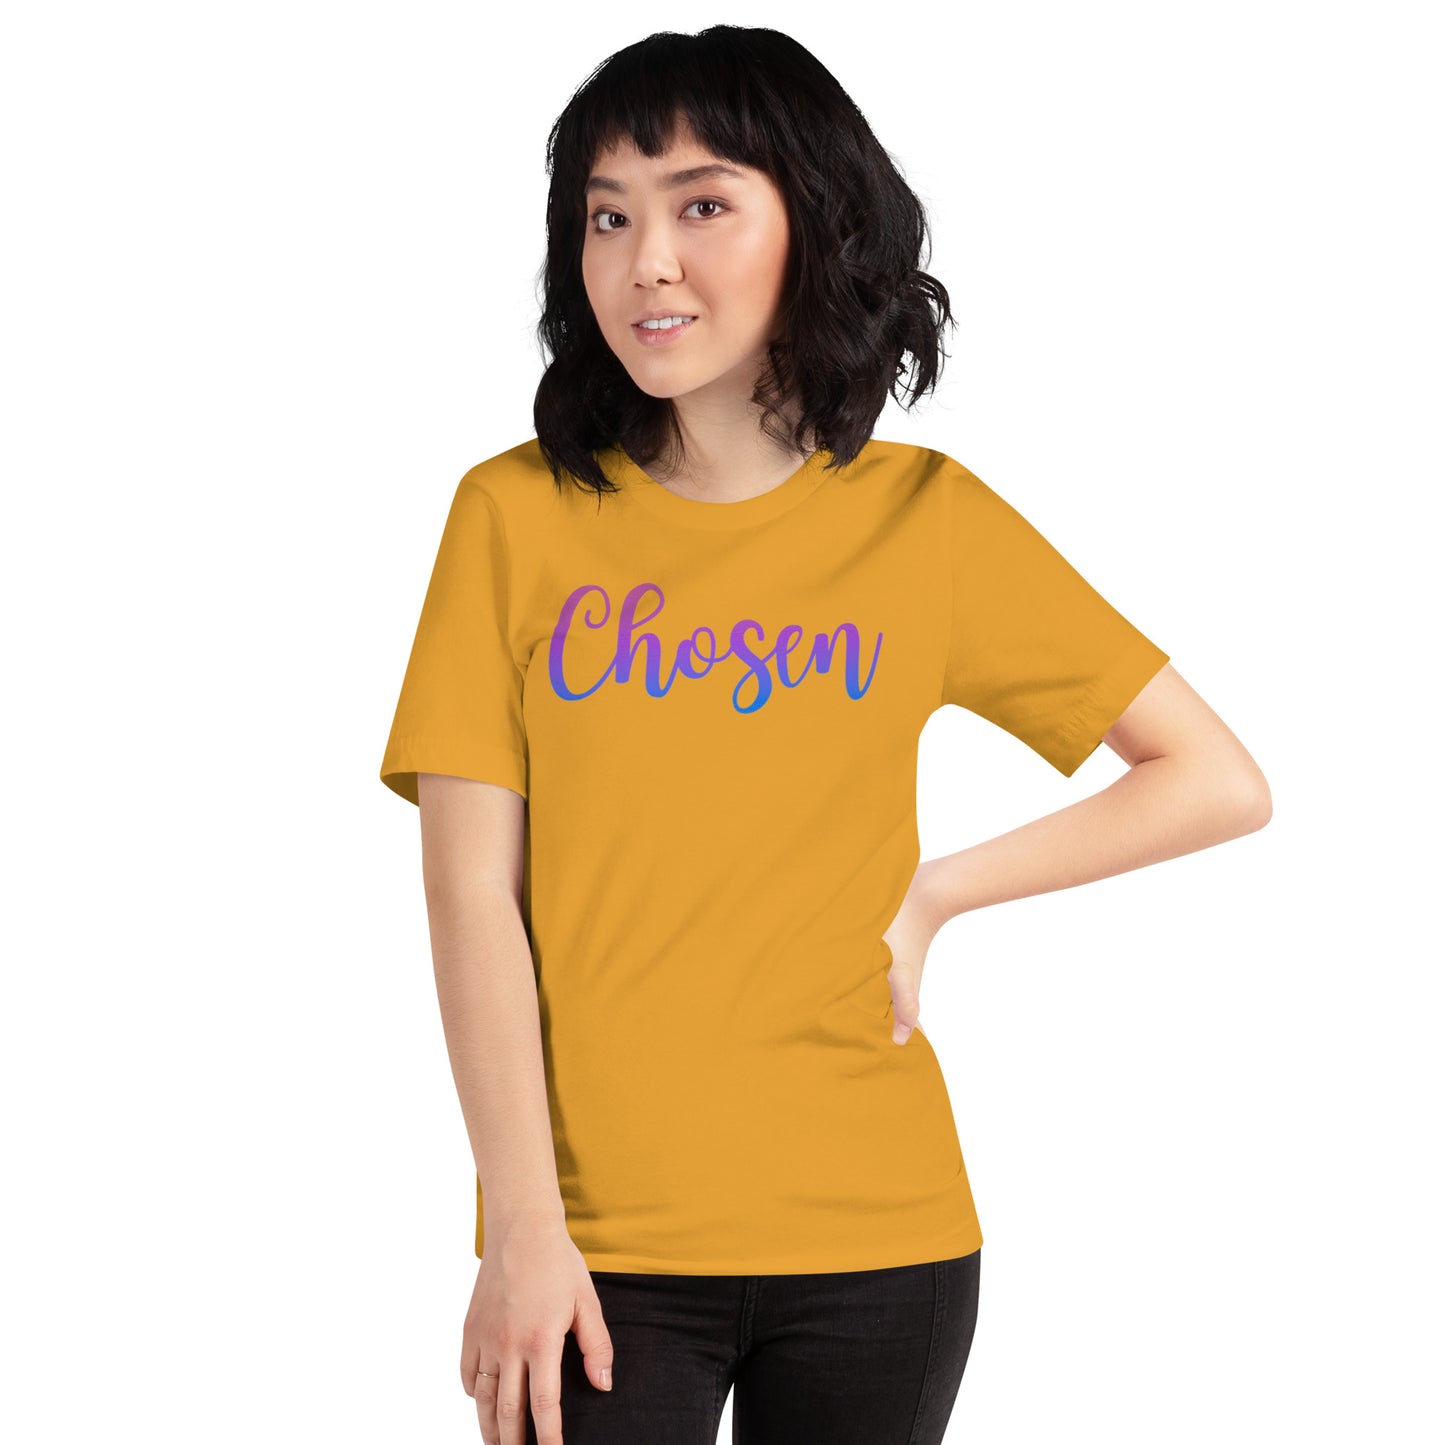 Chosen (multi-colored )Unisex t-shirt